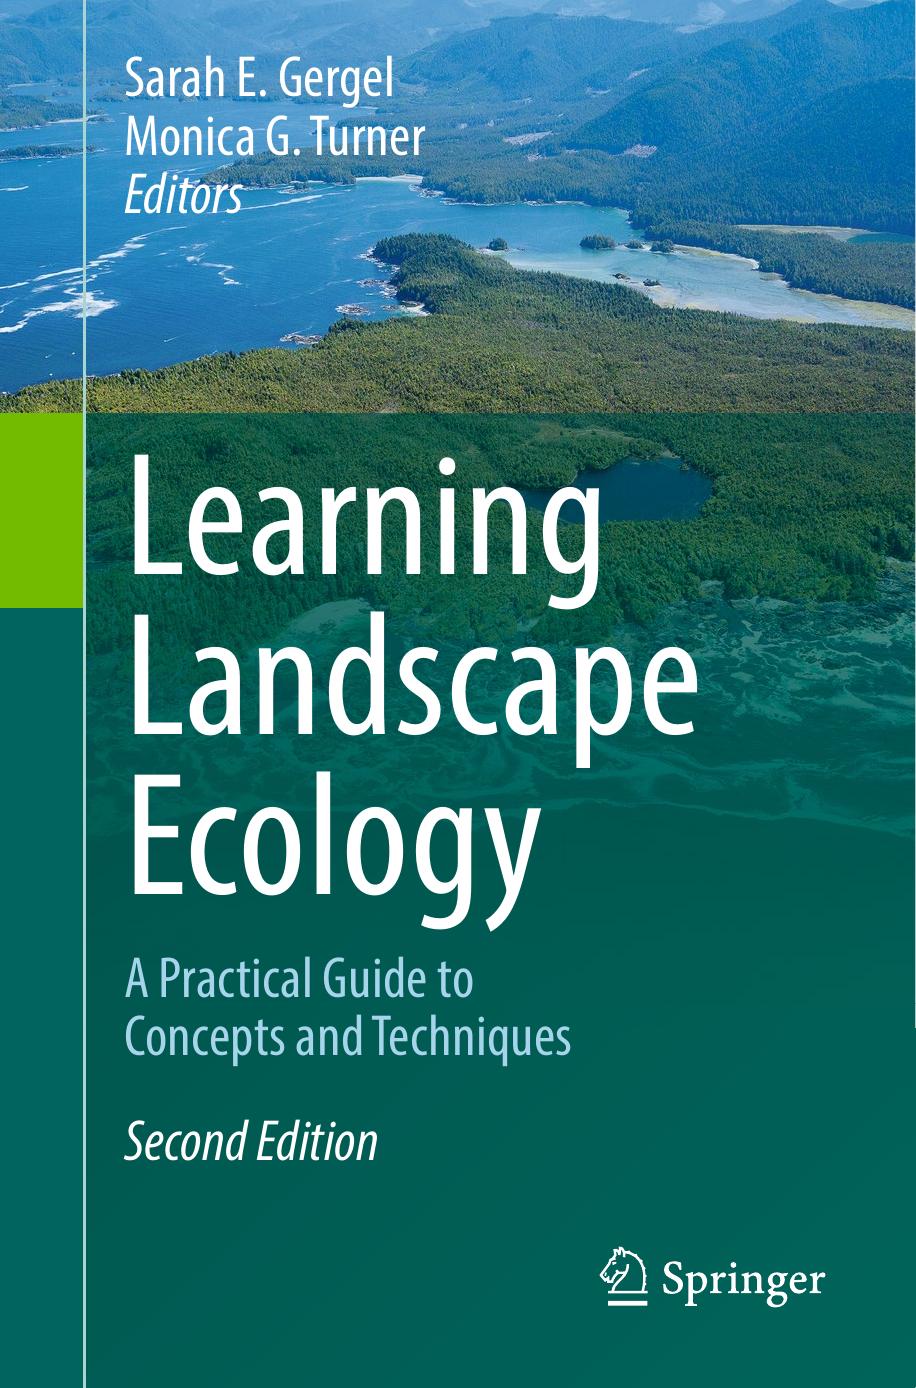 Learning Landscape Ecology by Sarah E. Gergel & Monica G. Turner